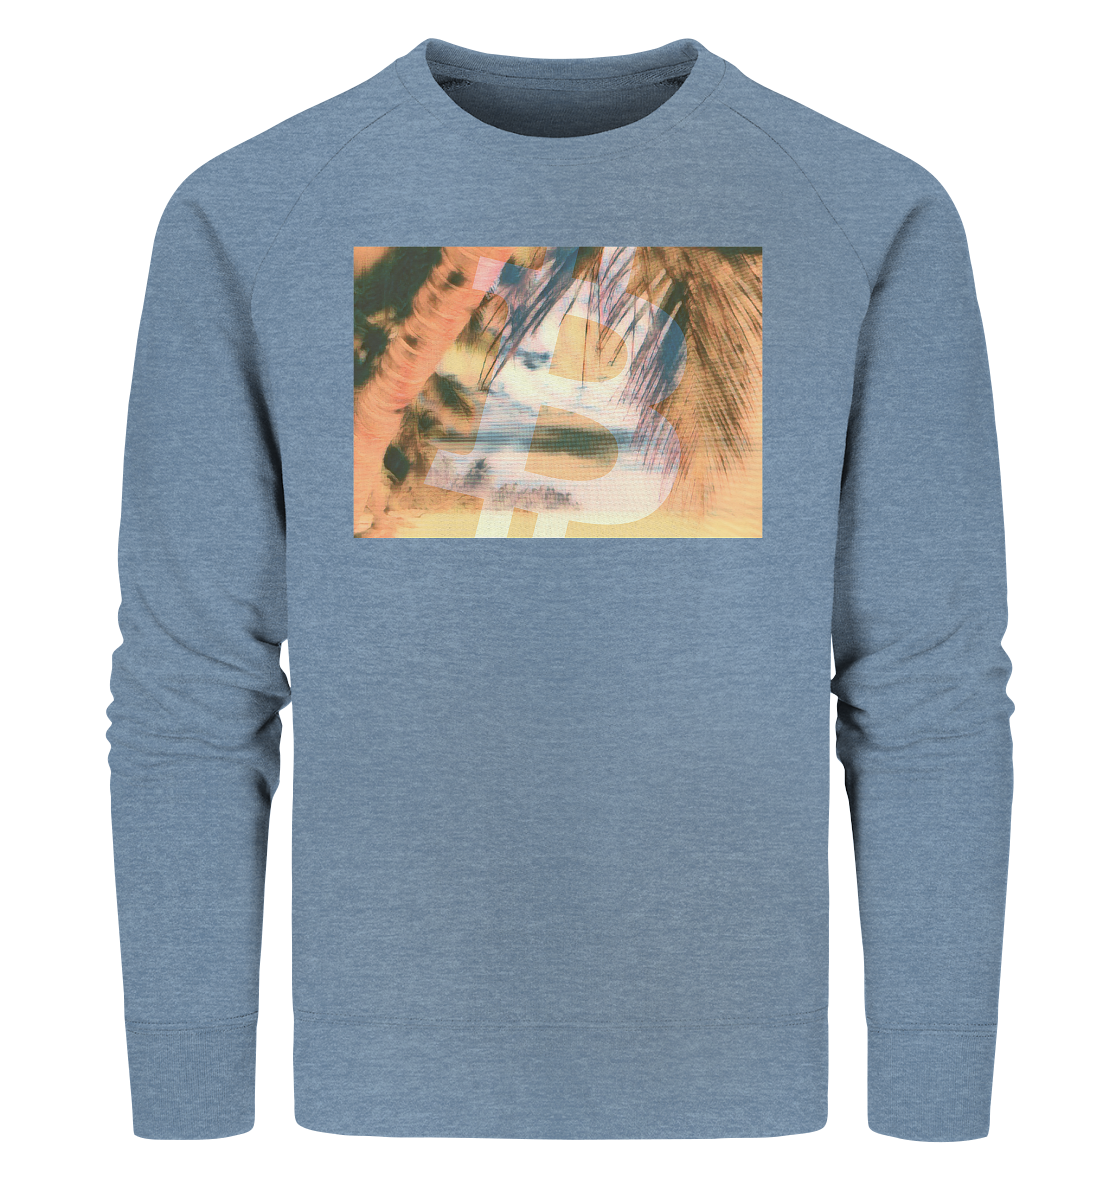 Bitcoin "Beach" - Organic Sweatshirt